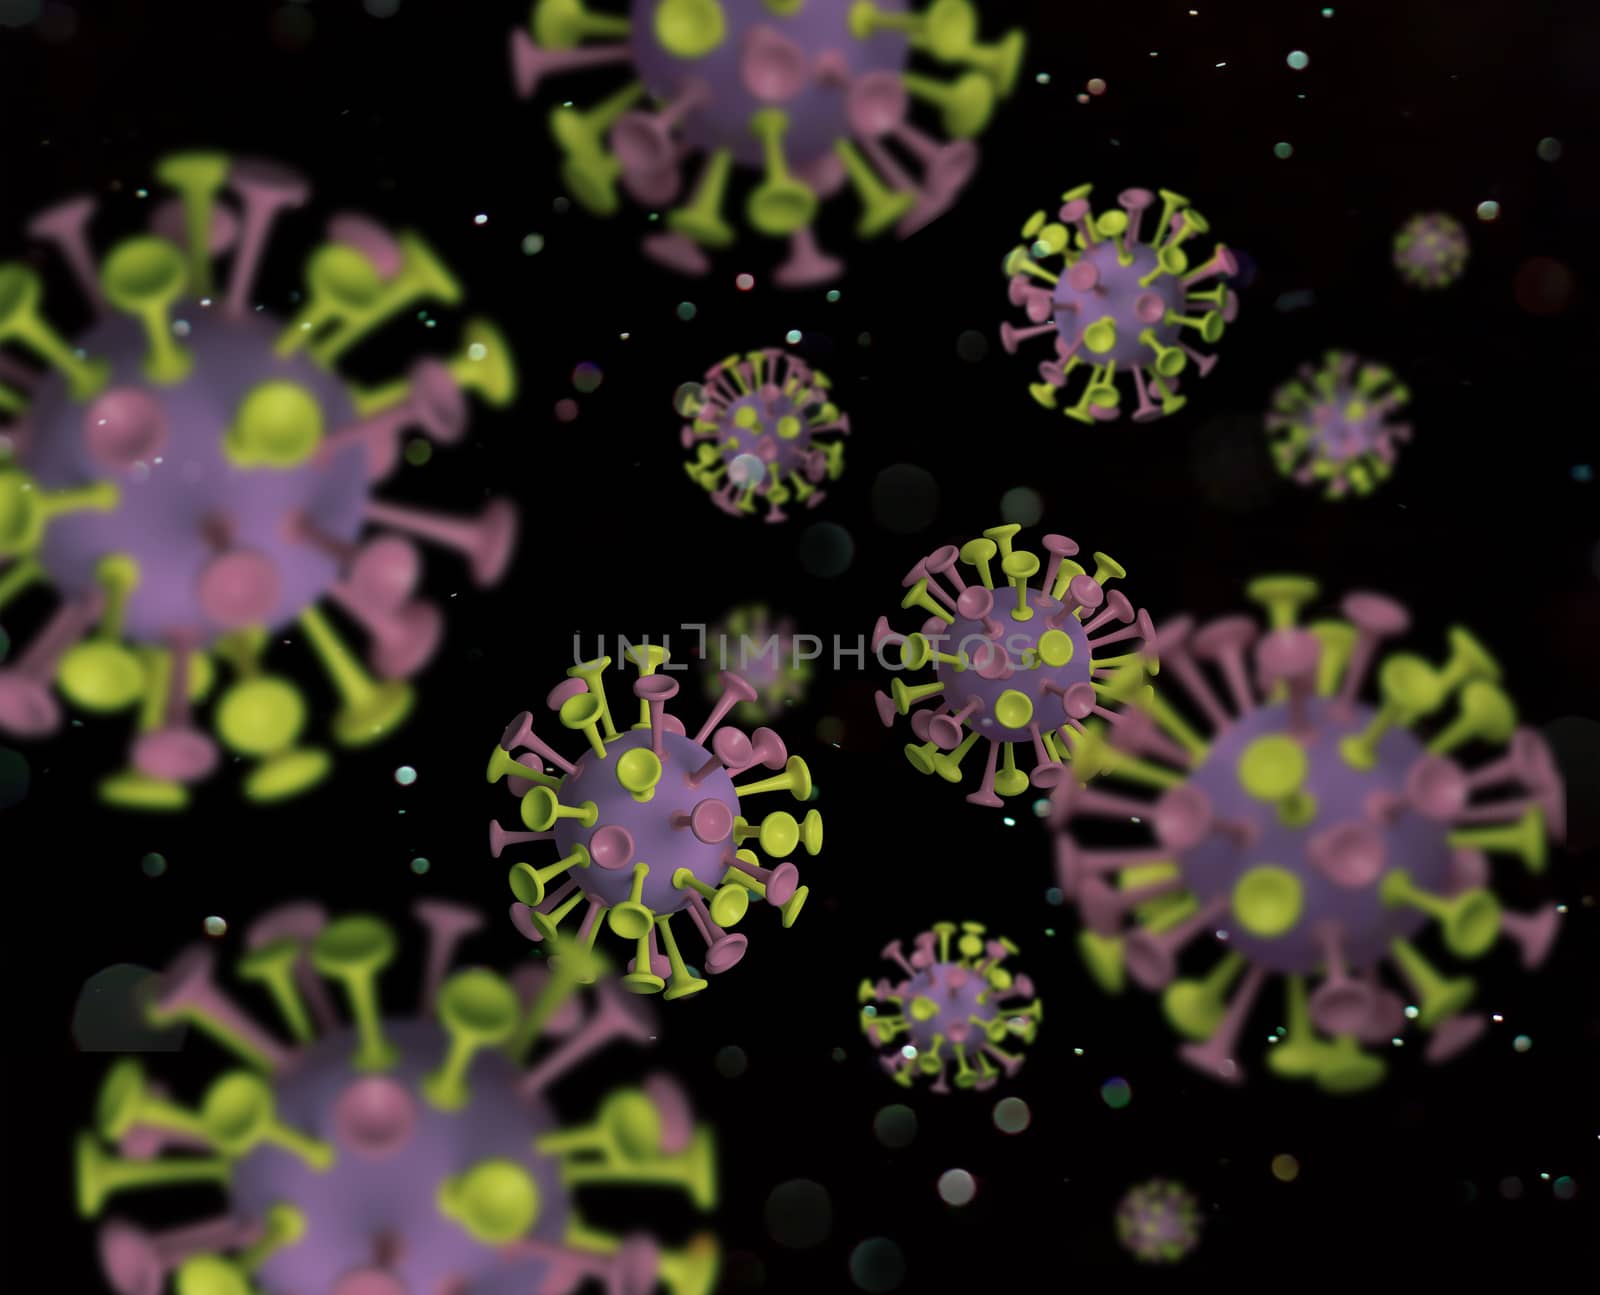 Simplified close-up illustration macro 3D rendering of corona viruses model